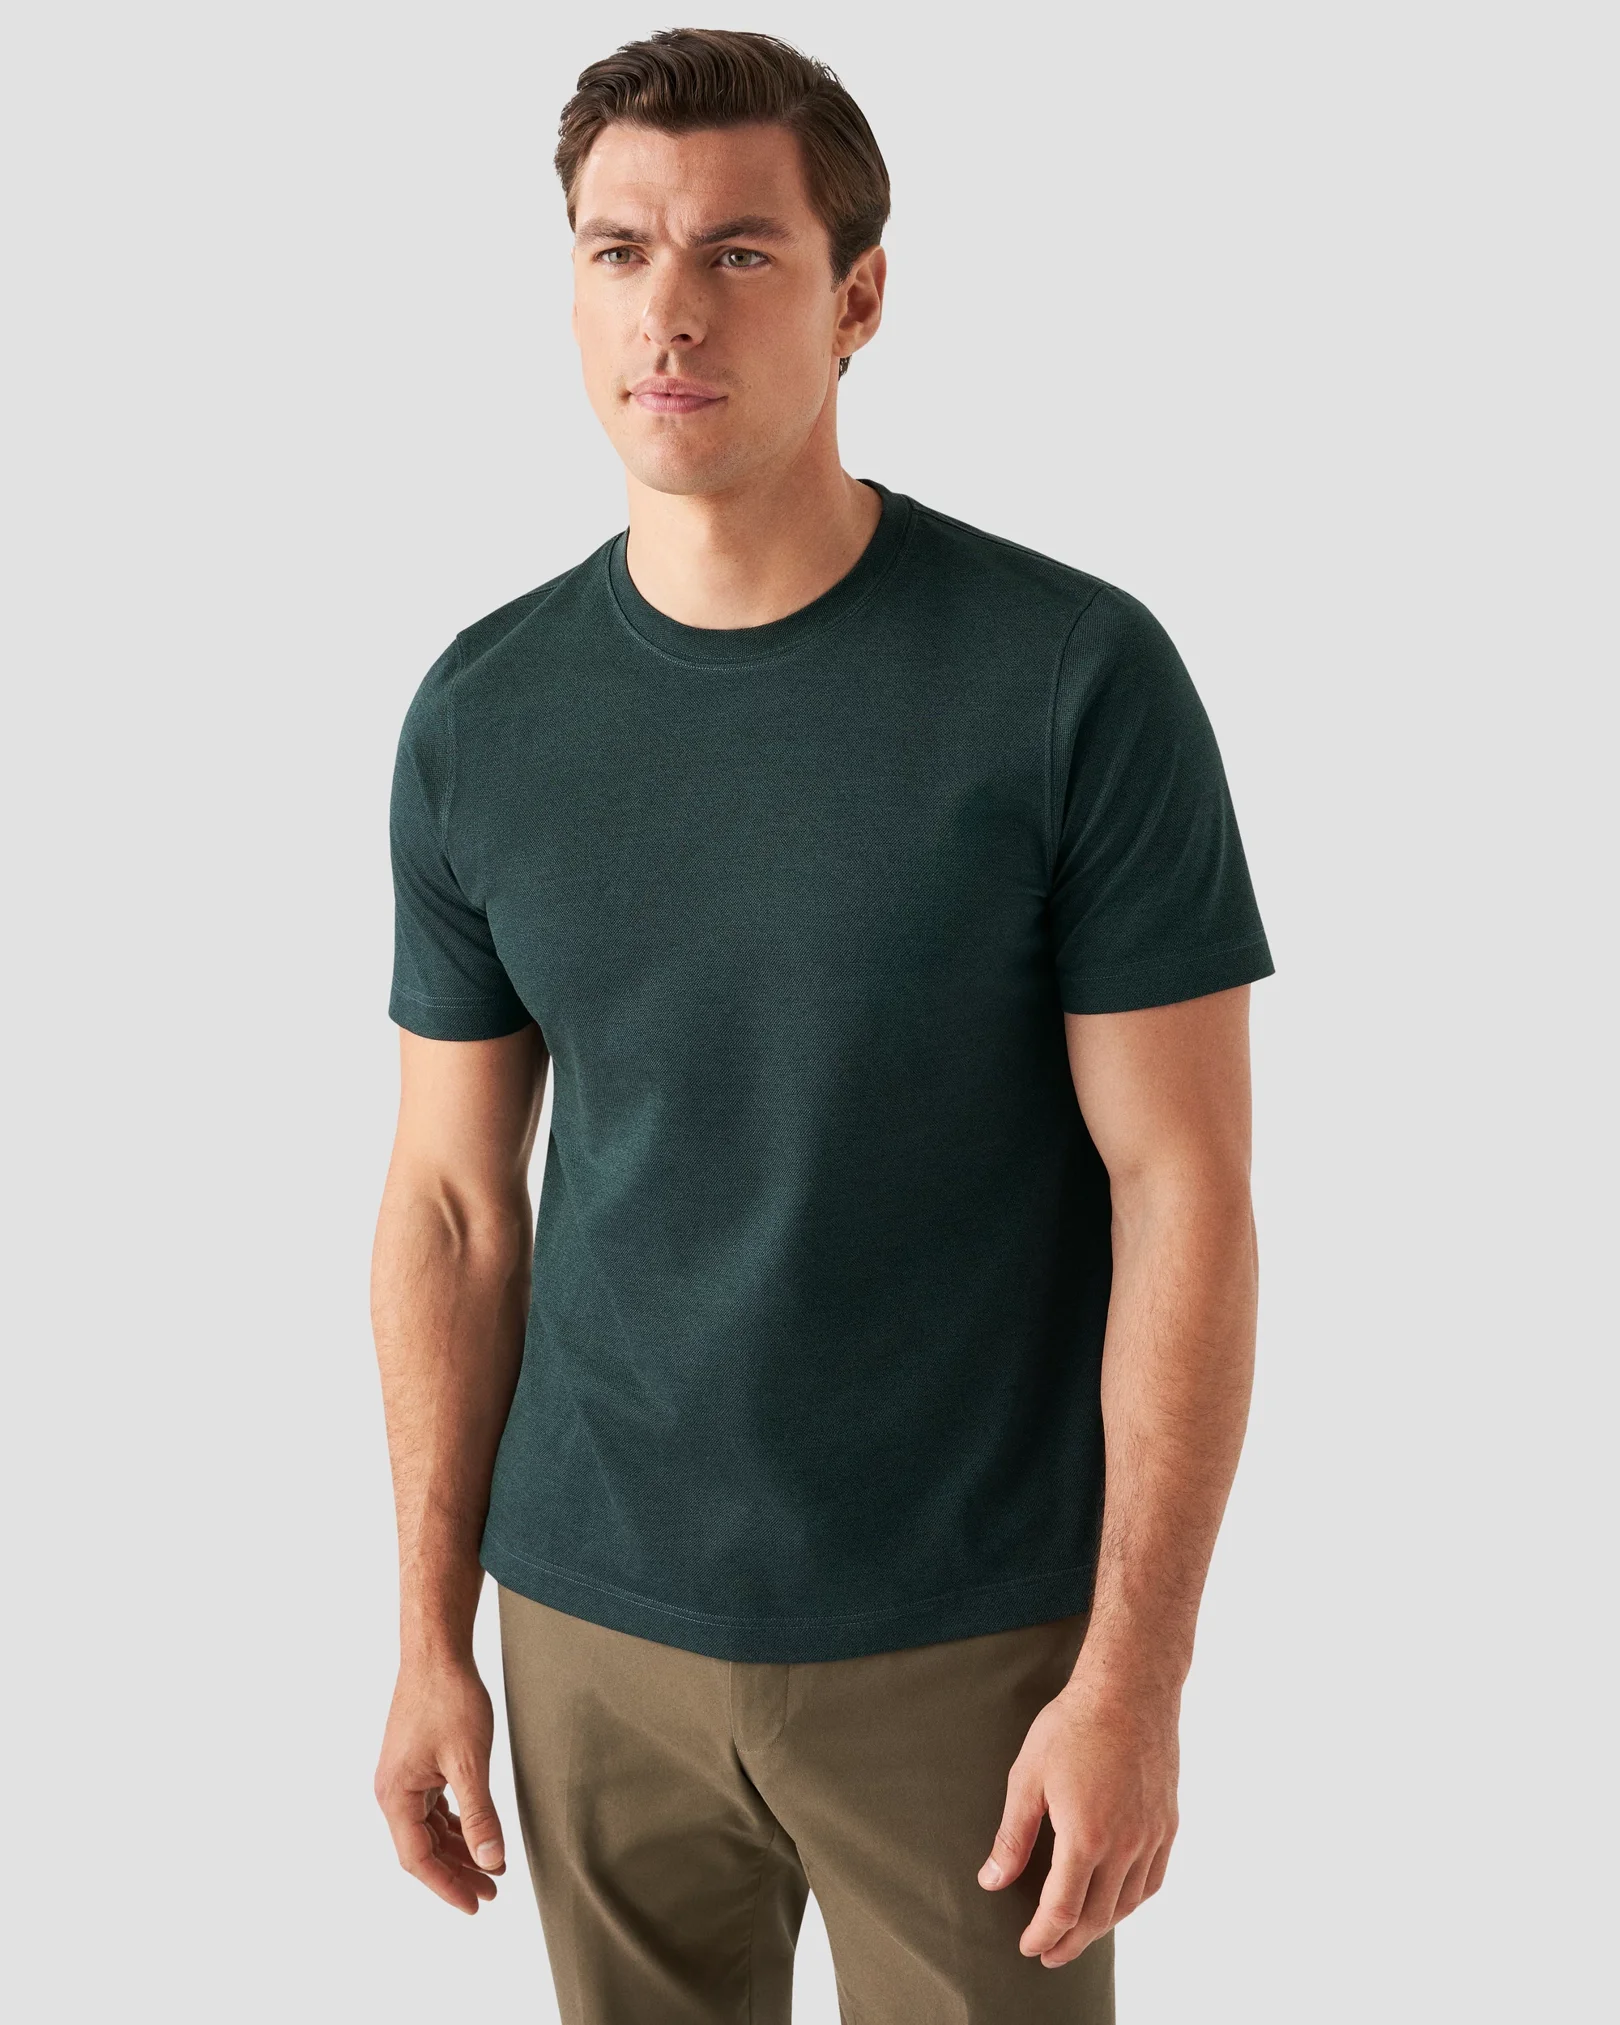 Eton - dark green t shirt